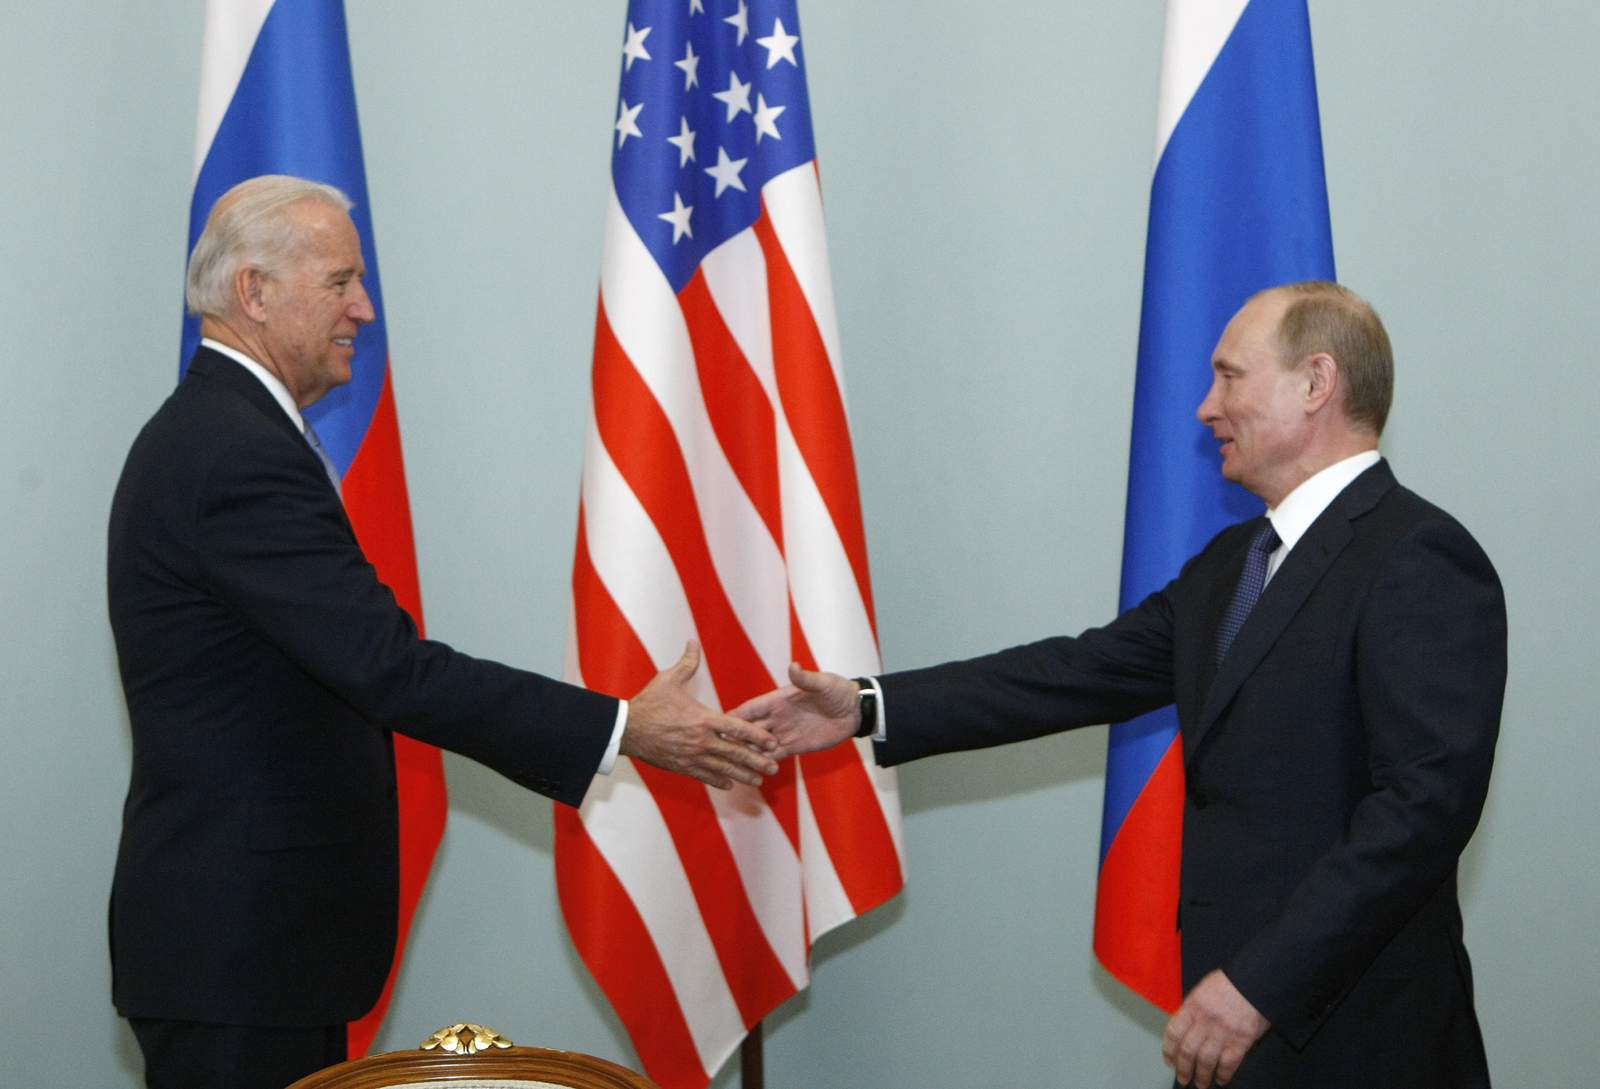 Putin won’t congratulate Biden until legal action resolved